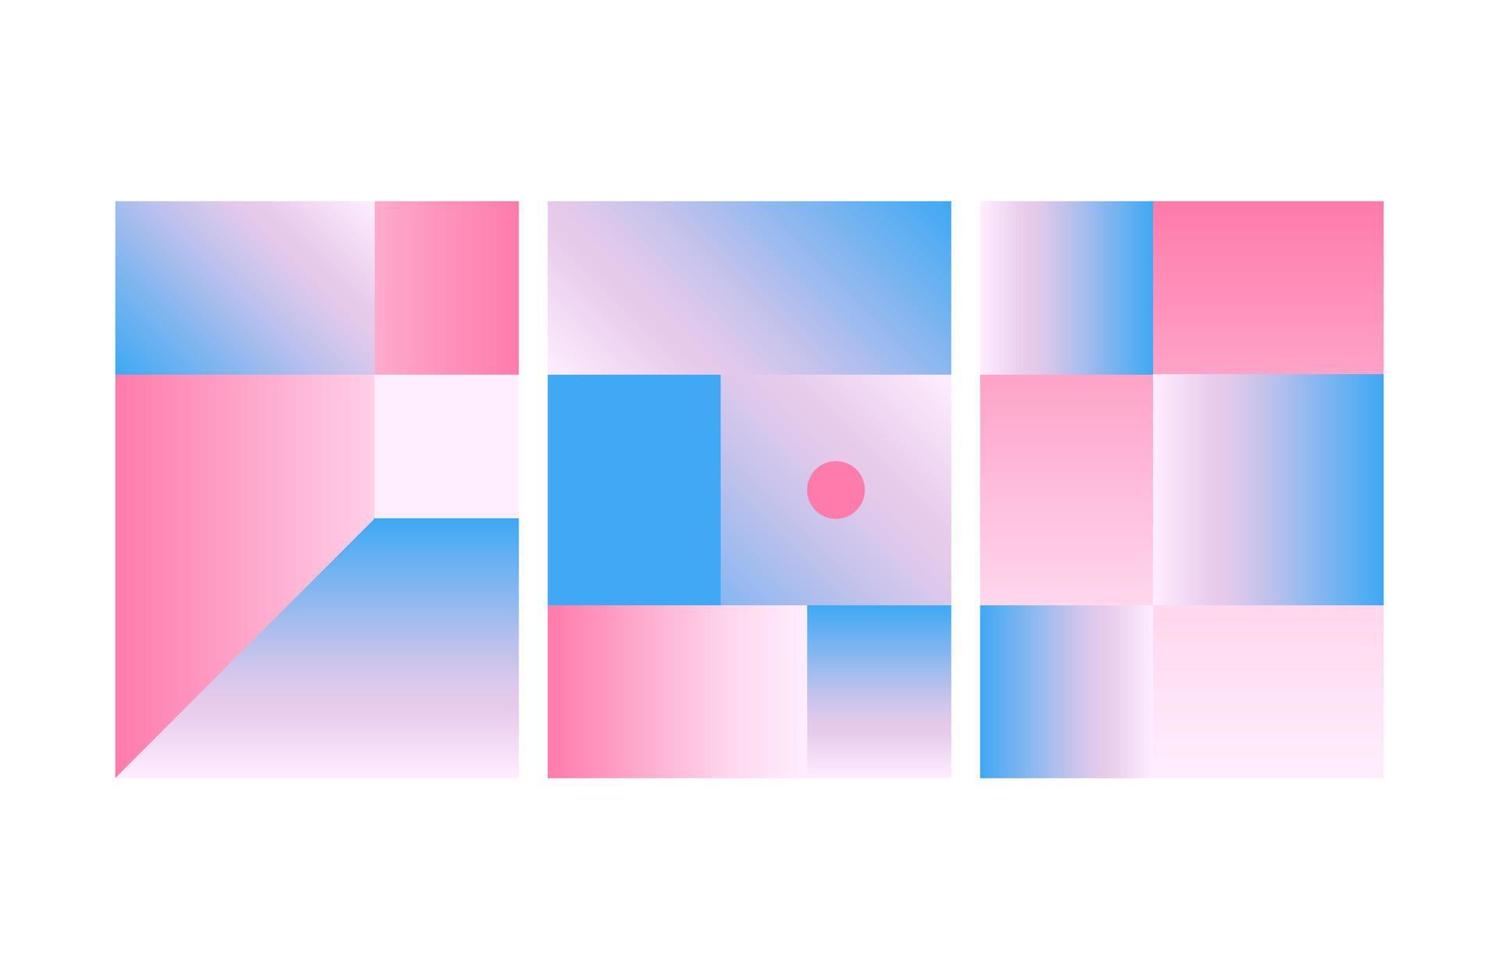 sfondo sfumato rosa blu liscio geometrico vettoriale